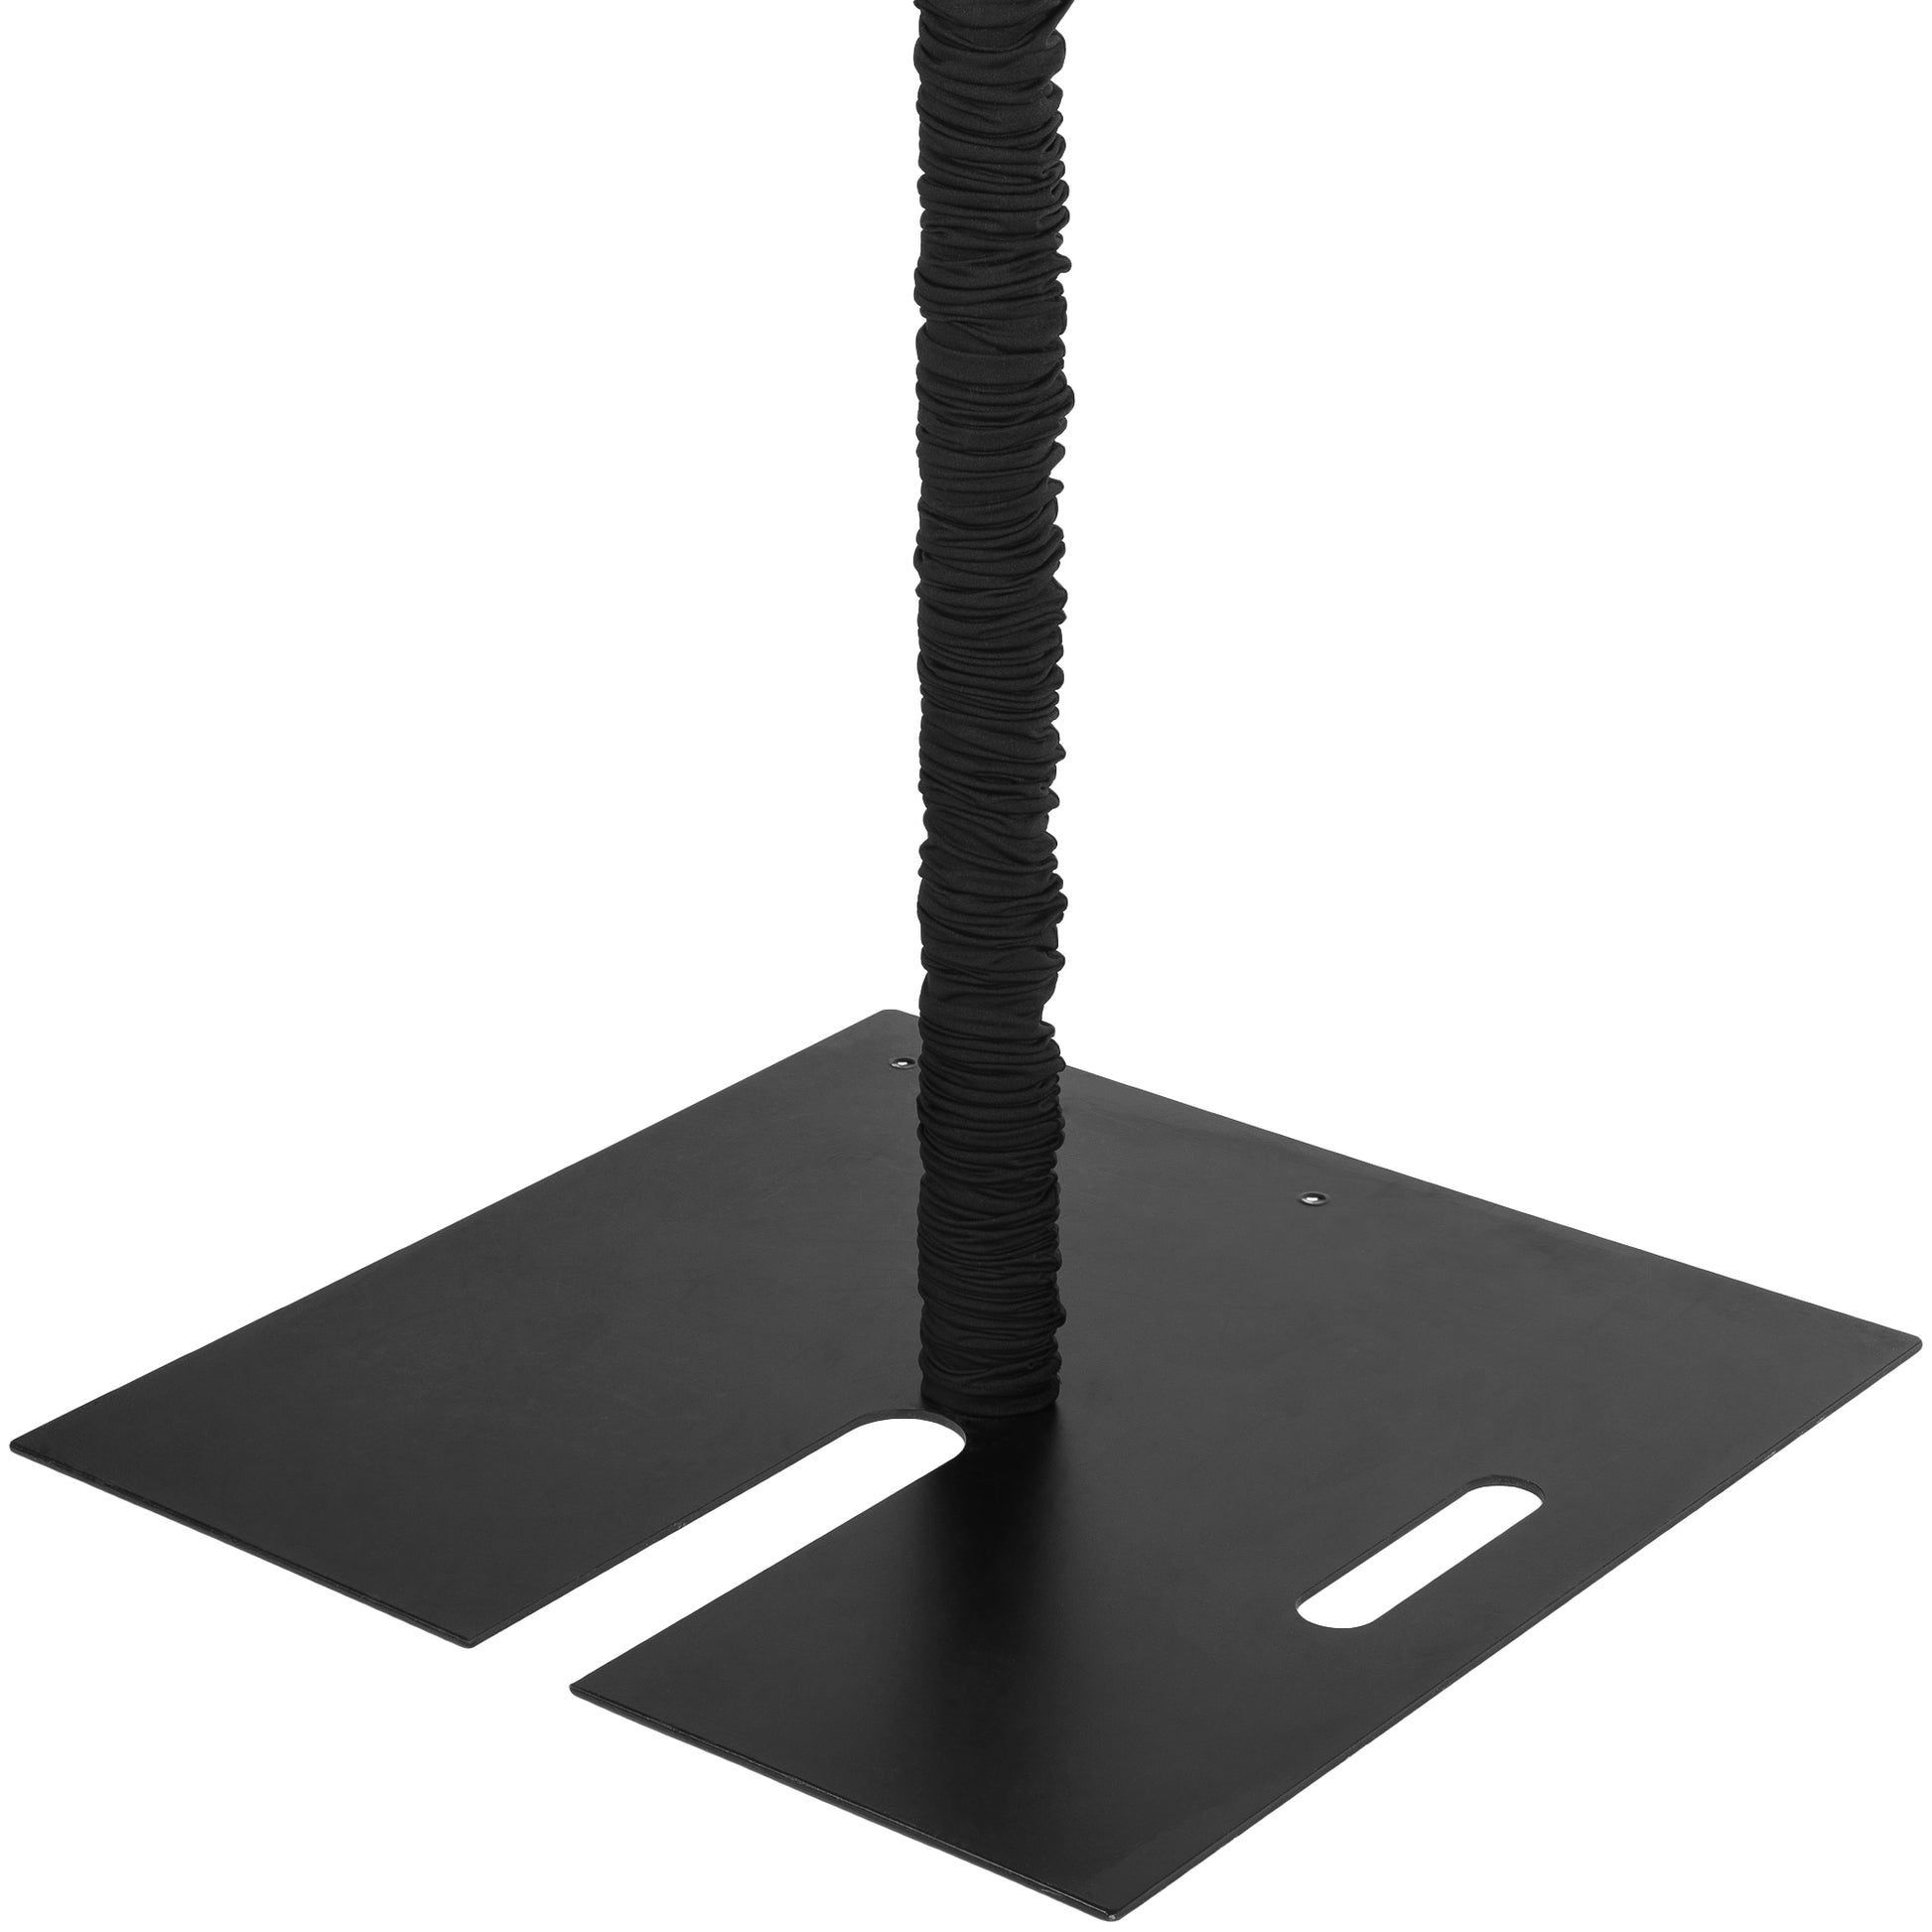 20ft Spandex Upright Pole Cover - Black - CV Linens